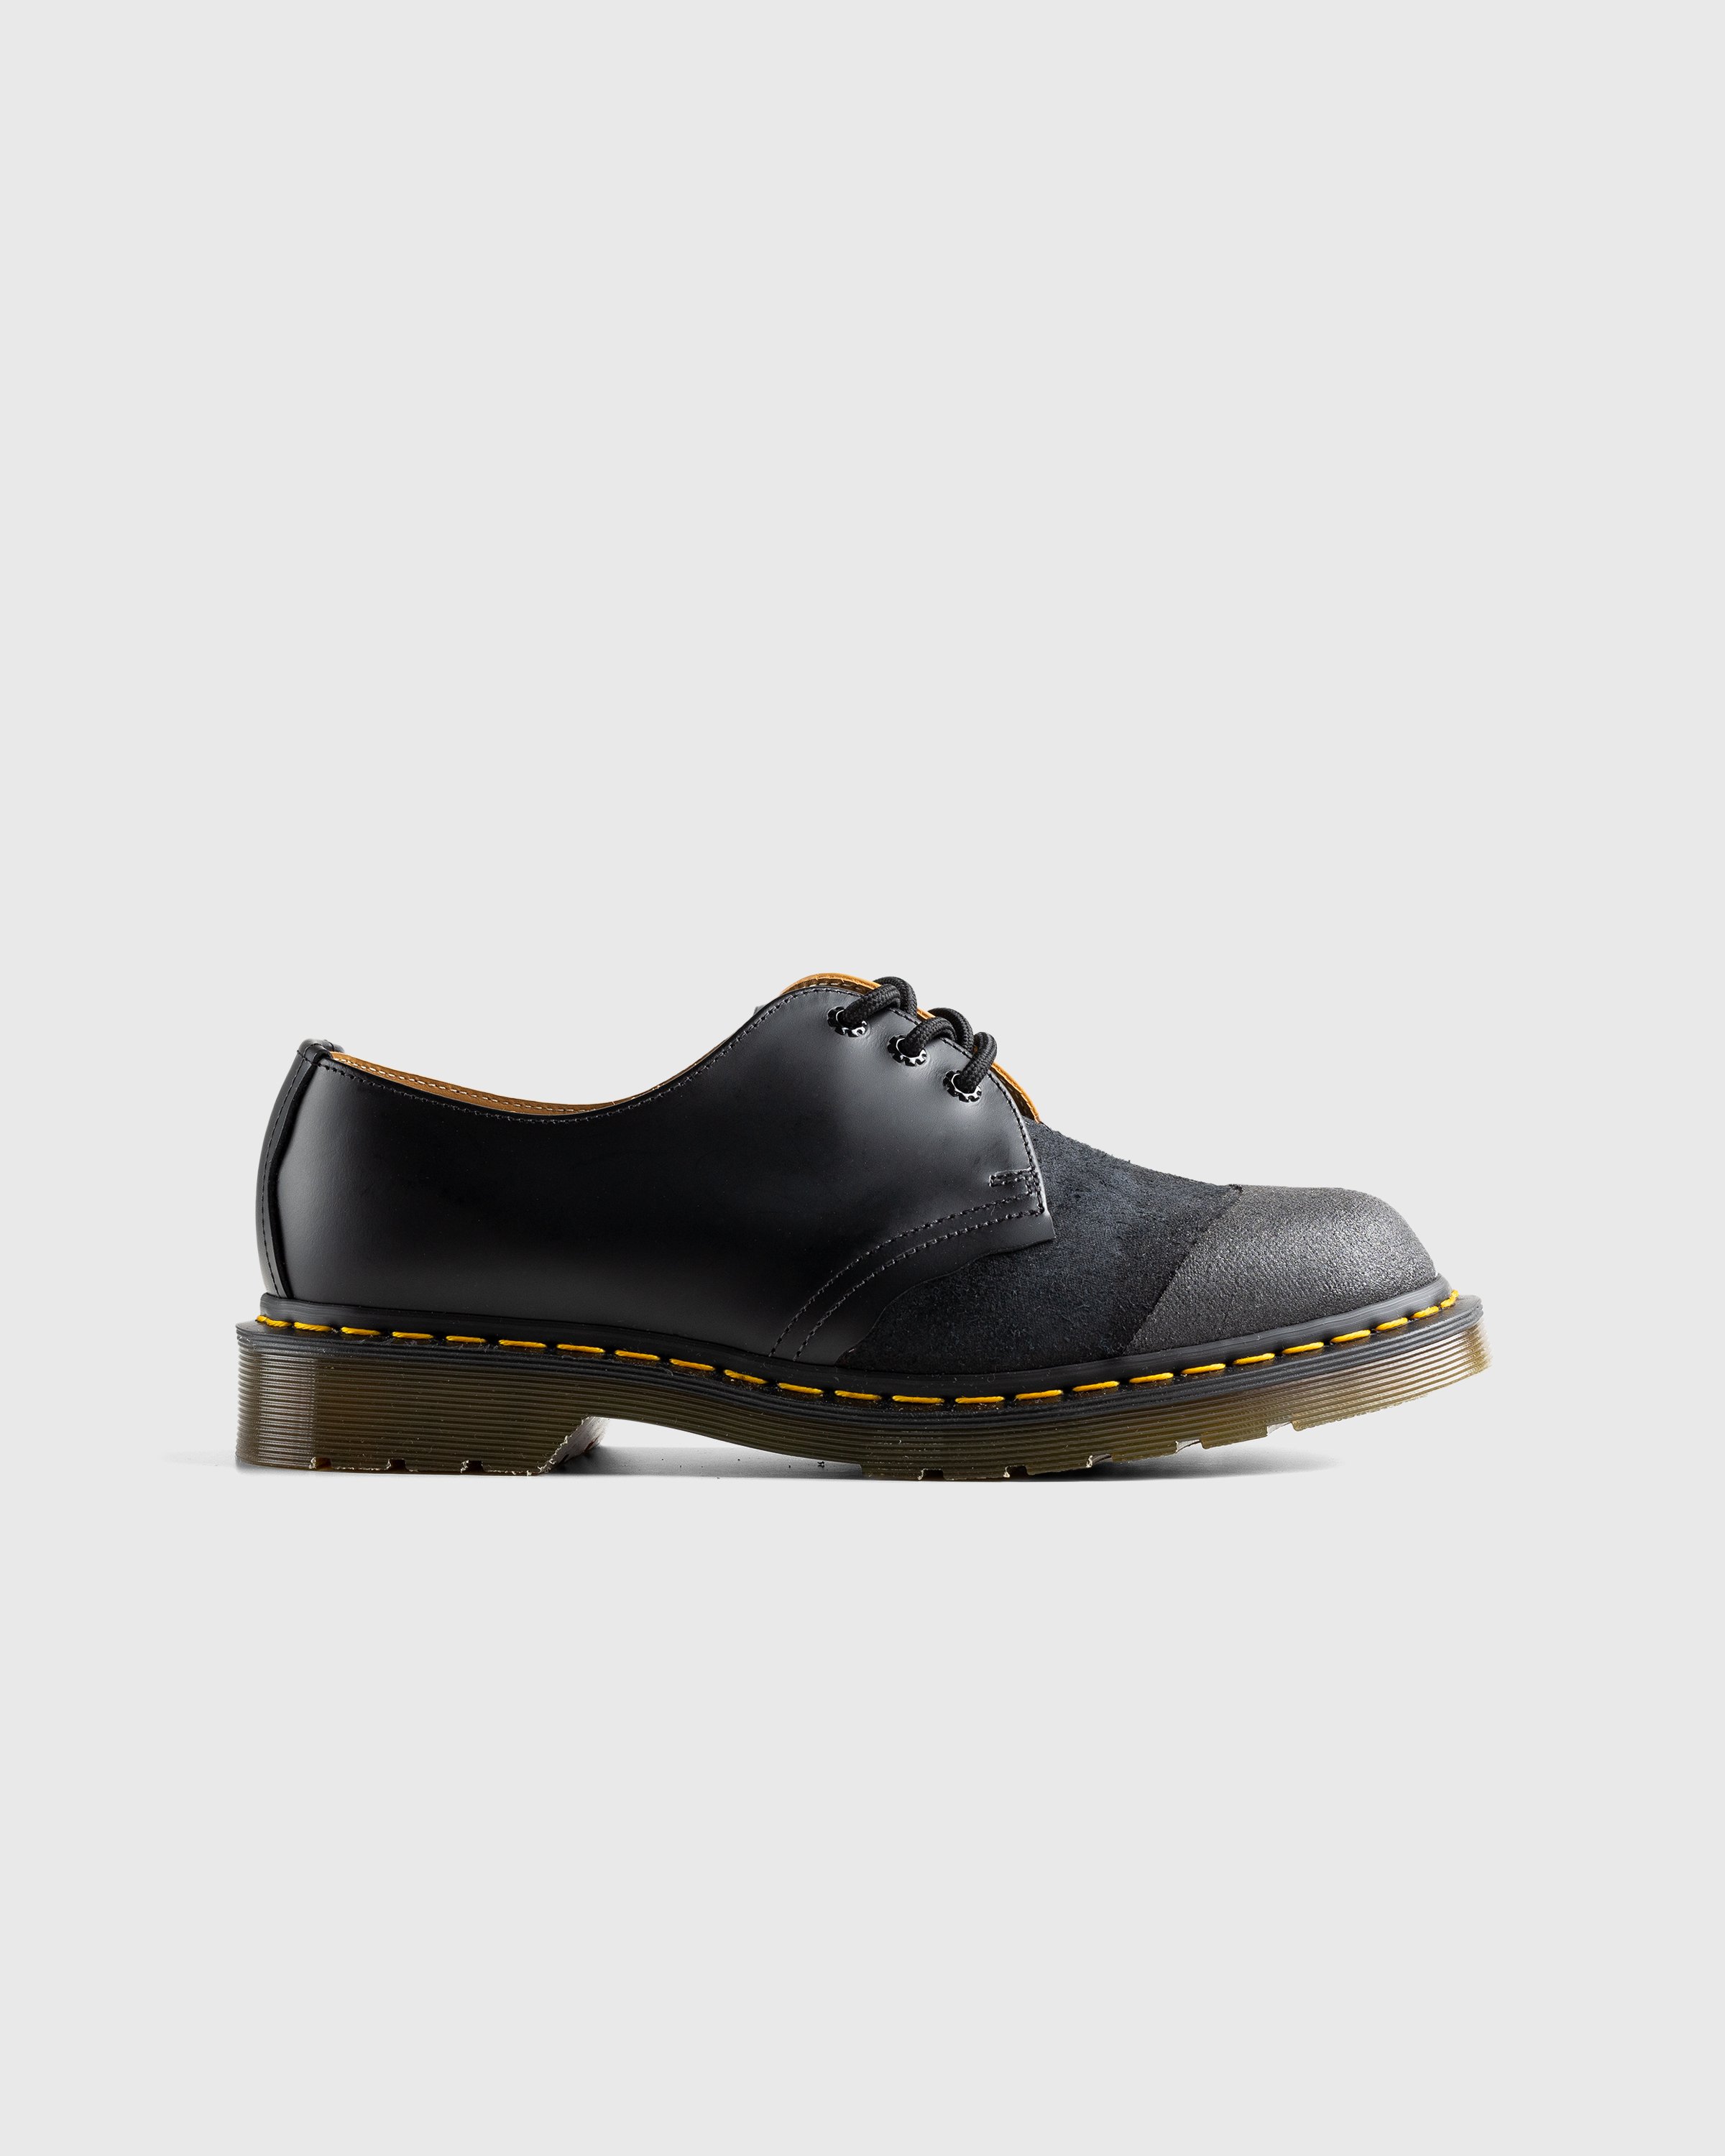 Dr. Martens - 1461 Reverse Black+Tan Smooth+Nappa - Footwear - Black - Image 1